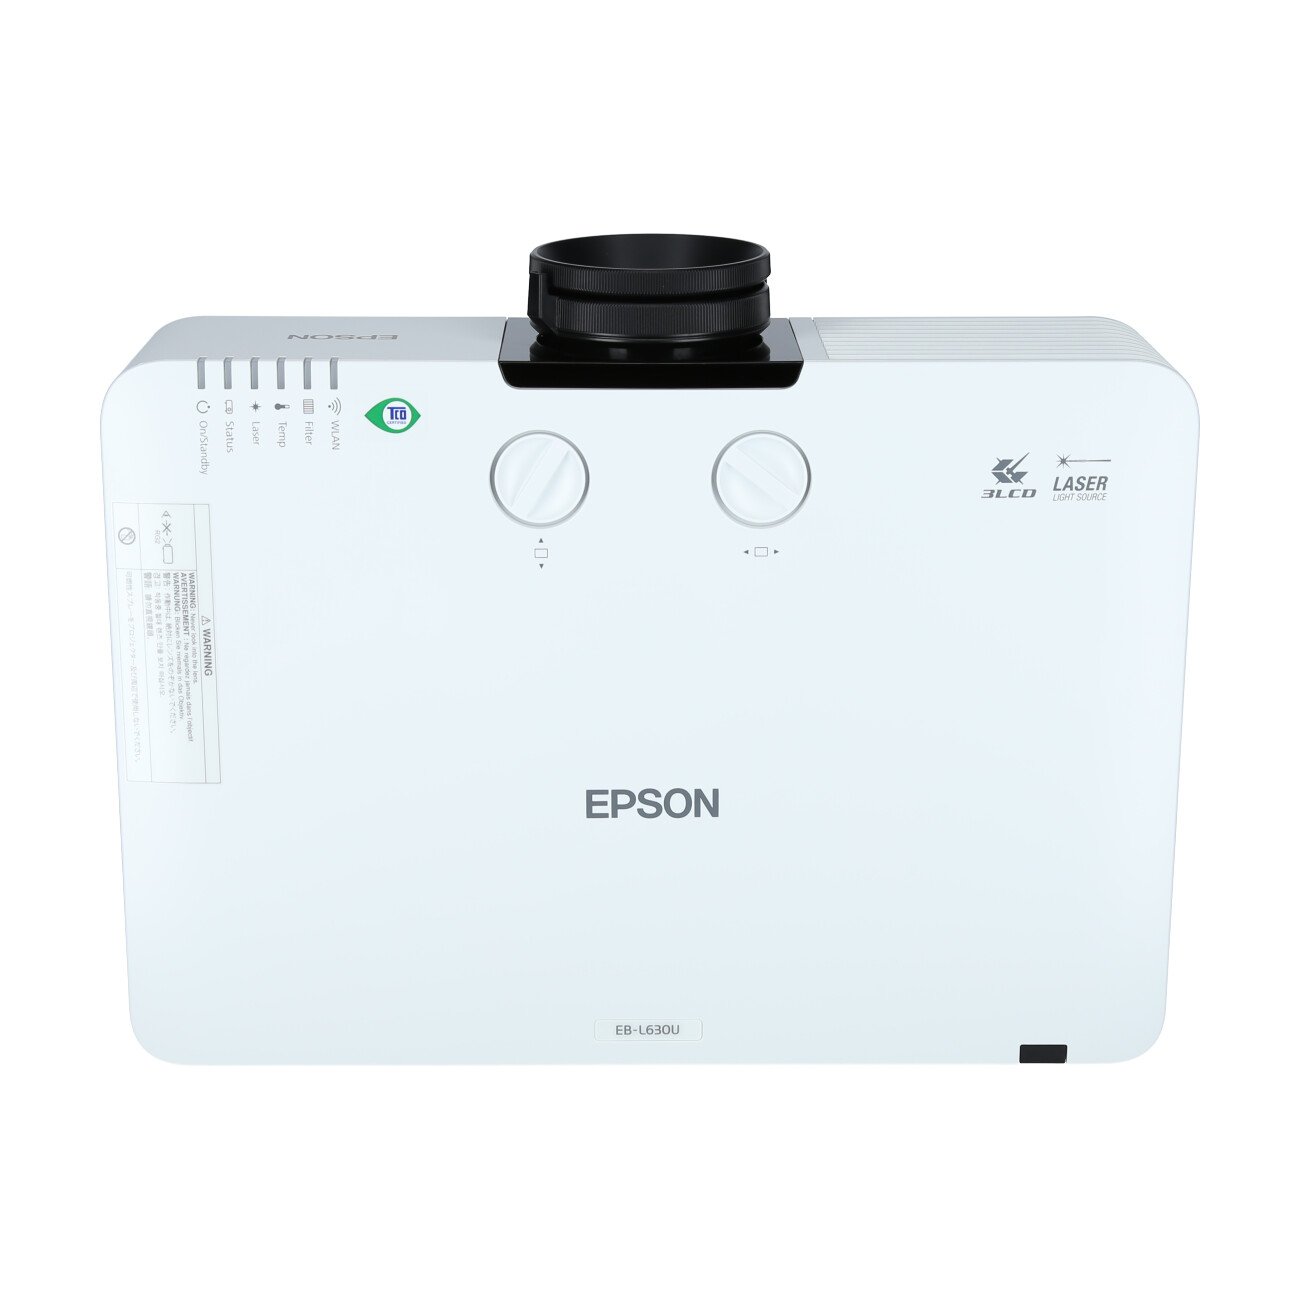 Epson-EB-L630U